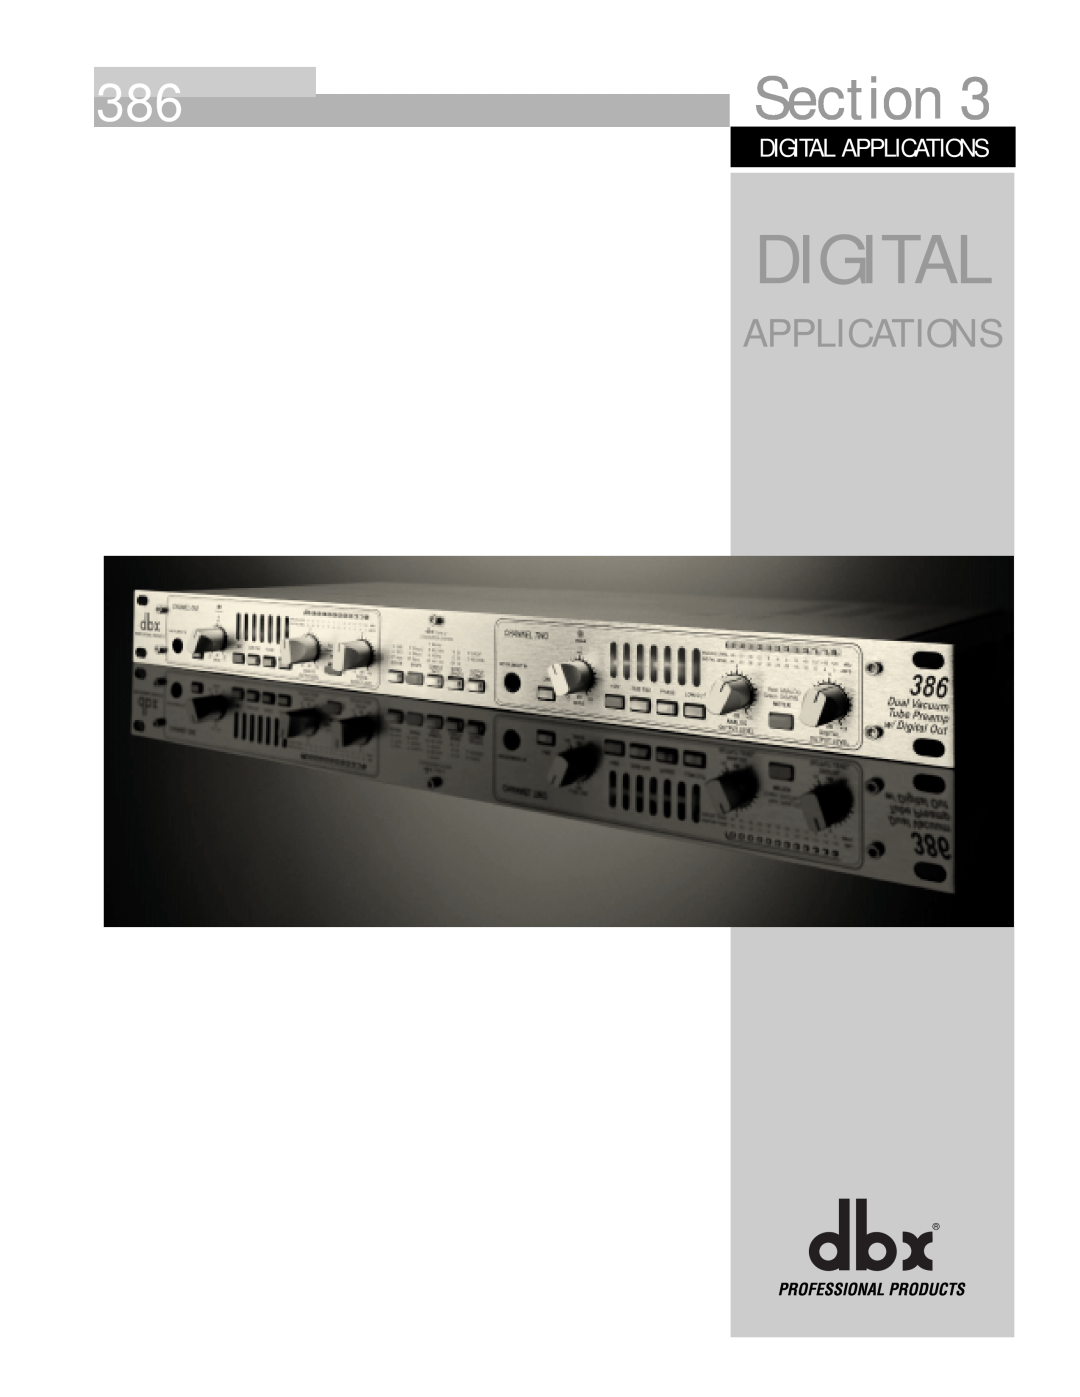 dbx Pro 386 user manual Digital Applications, Section 